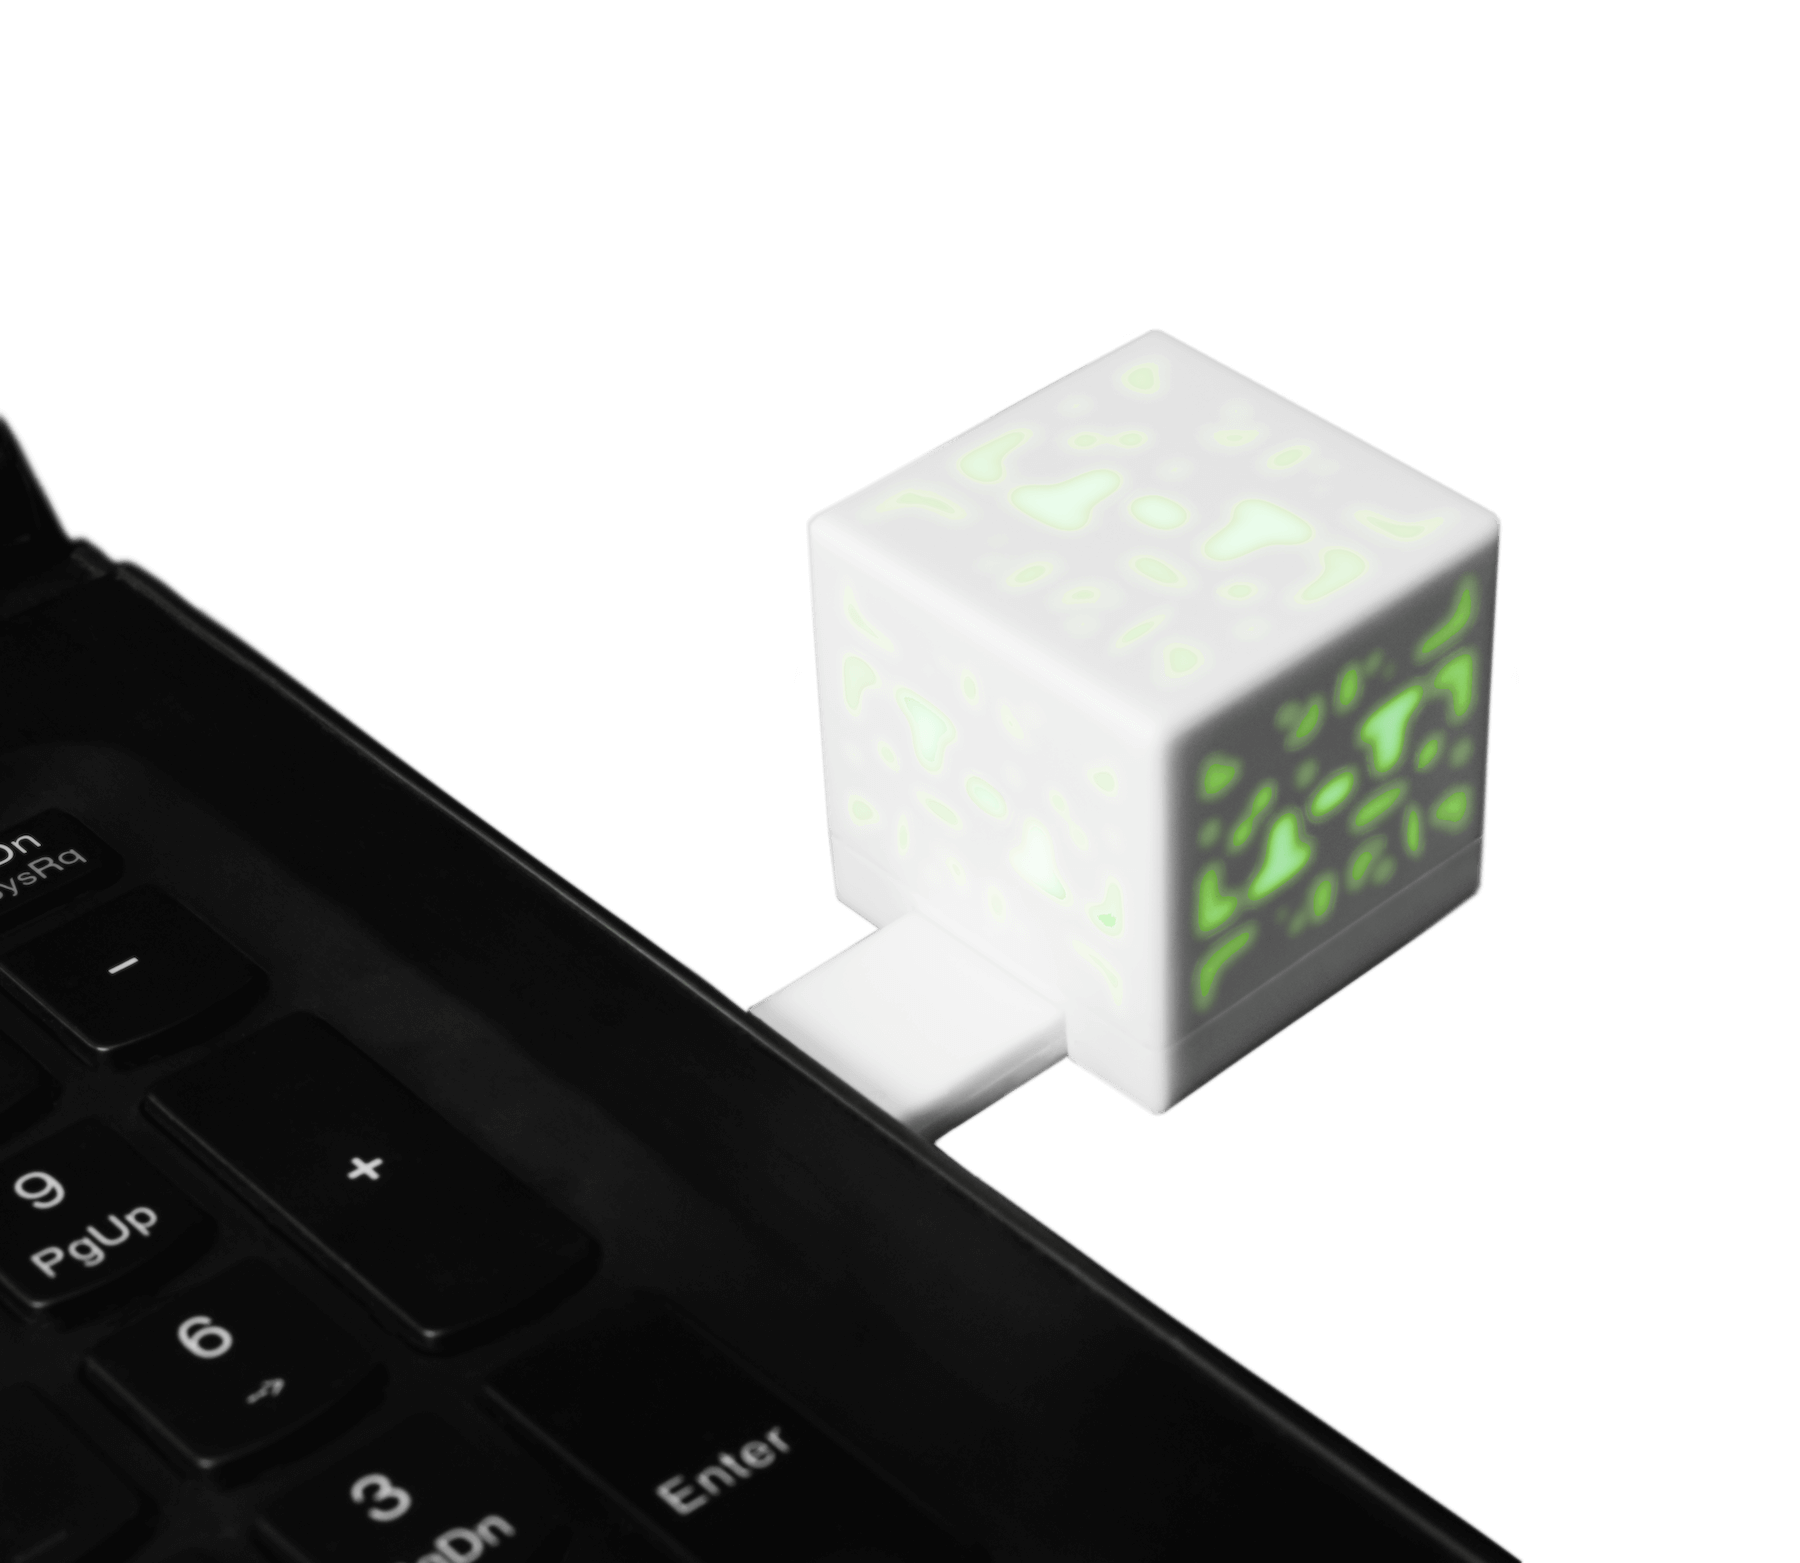 Wwwdot Xxhd Bideo Mp3 Com - The Shred Cube - A USB Permanent File Shredder for Mac & PC